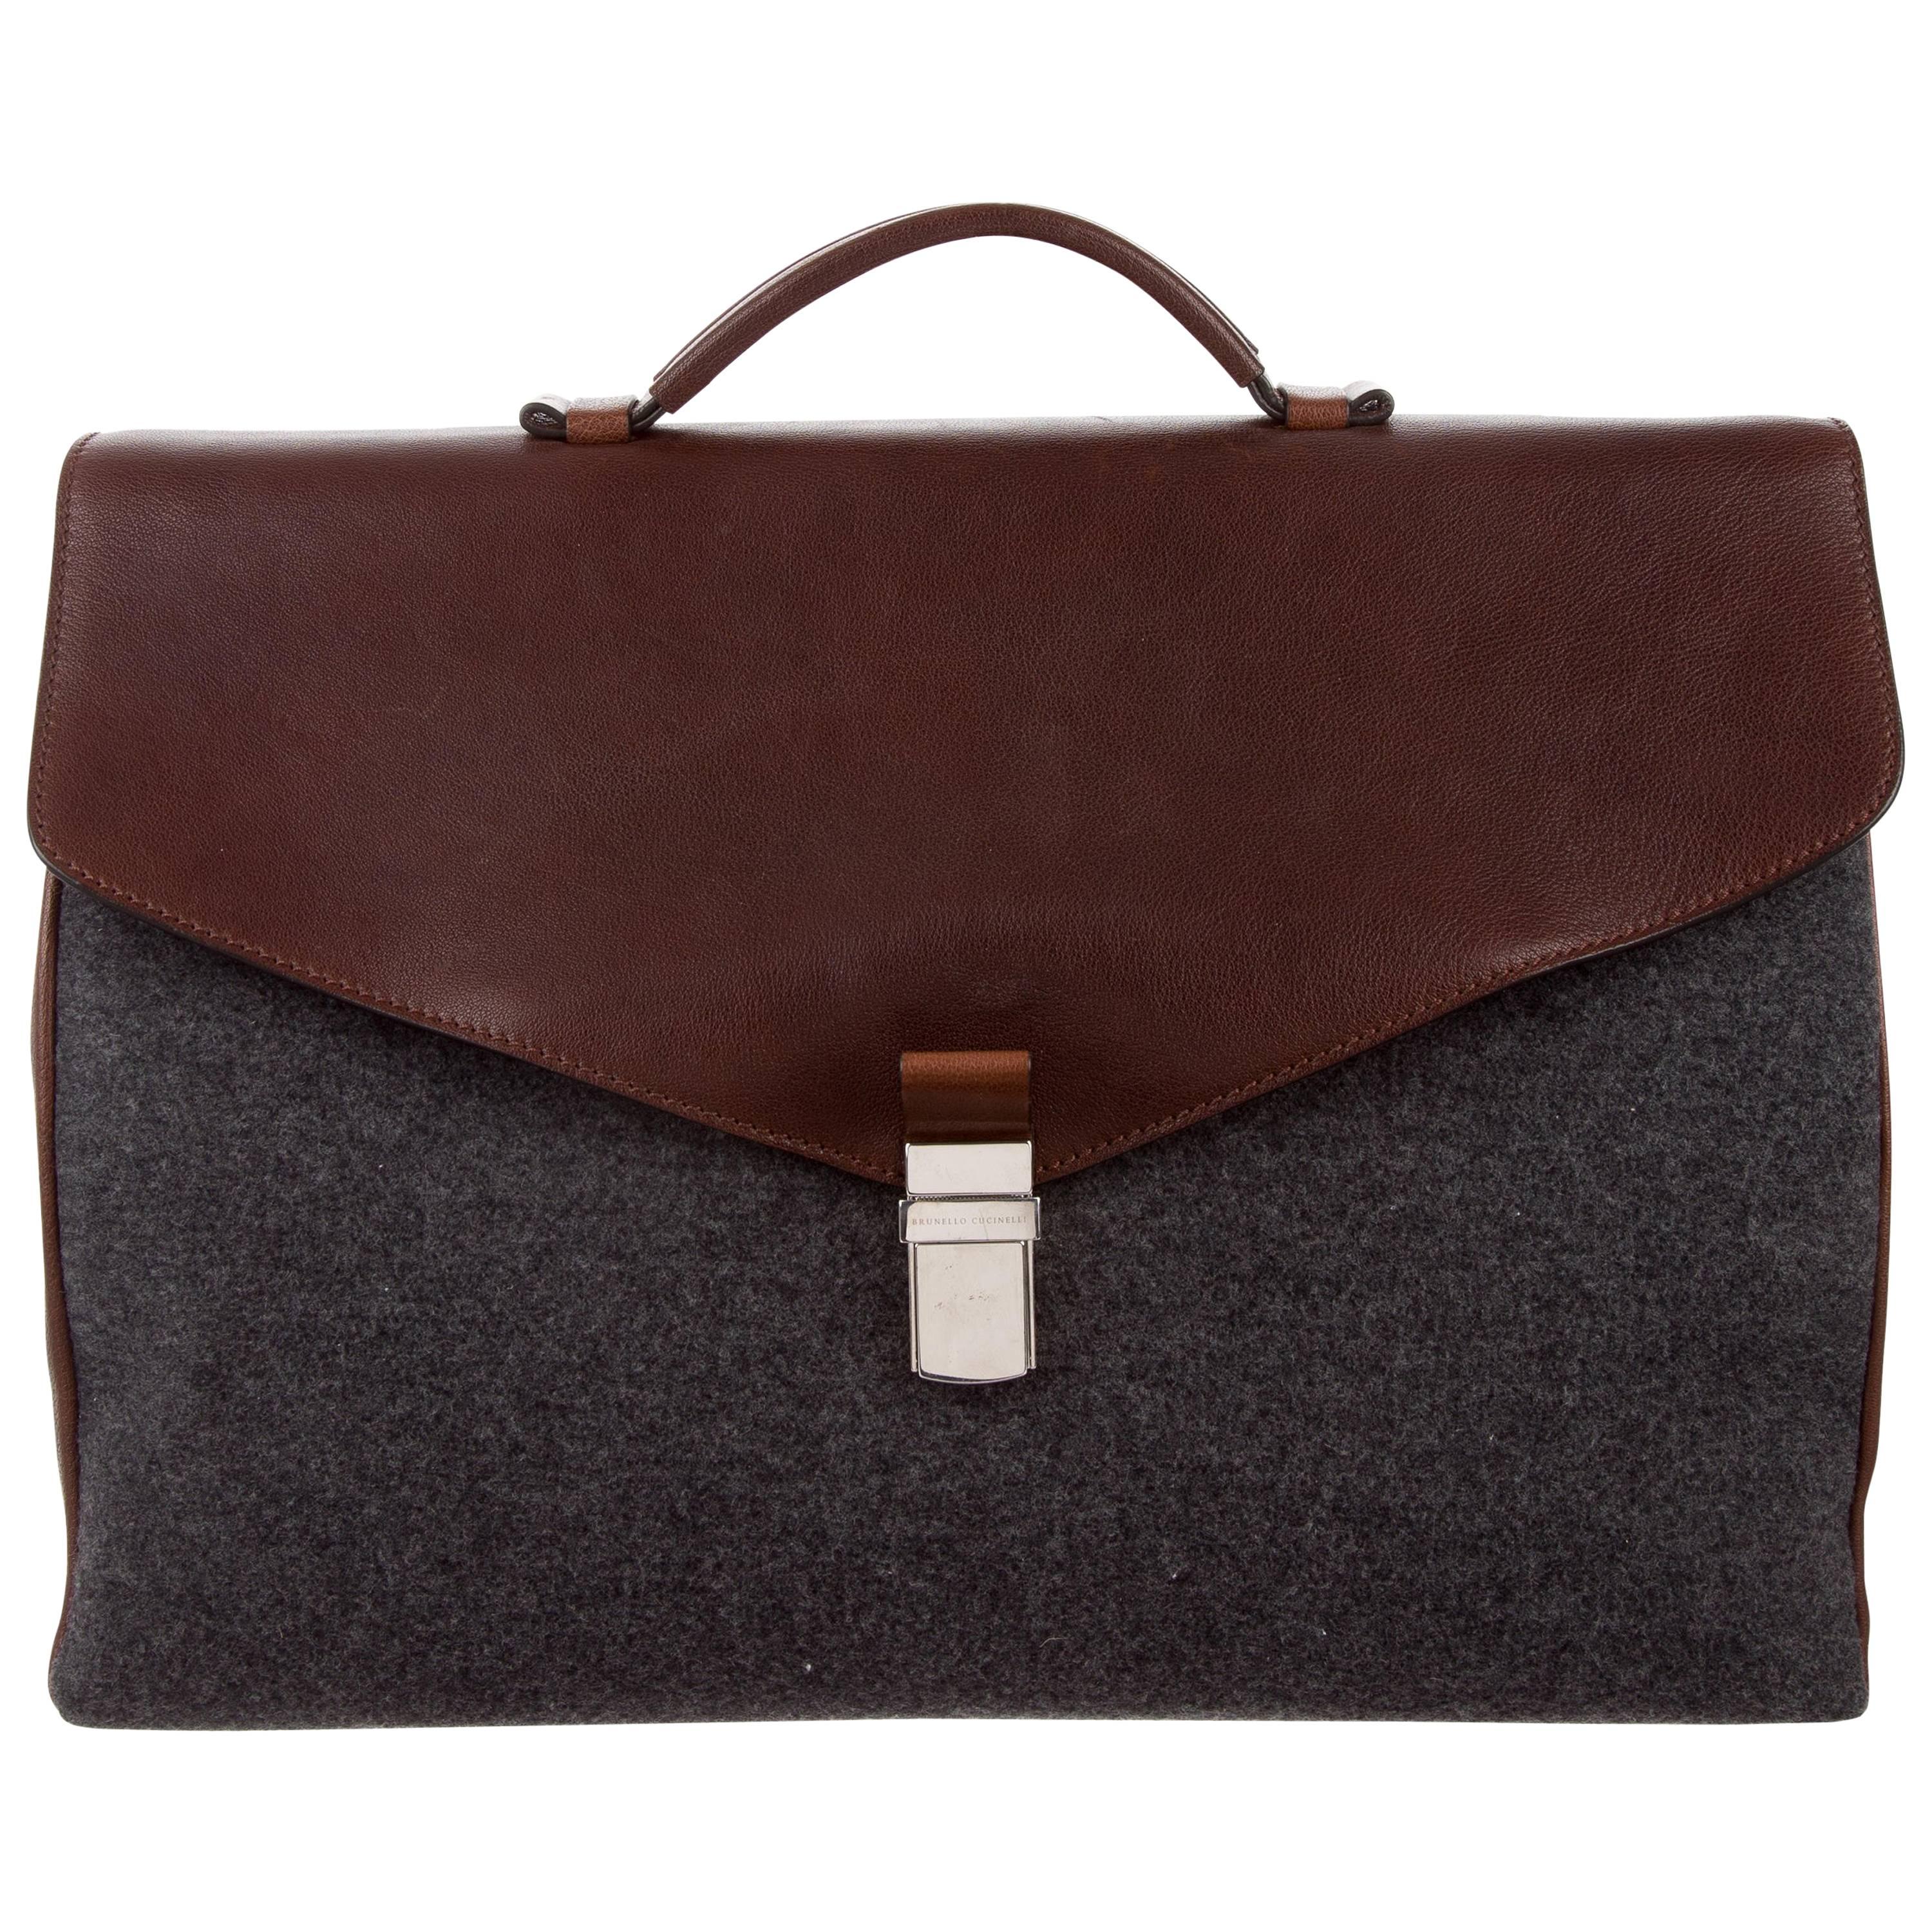 Brunello Cucinelli New Leather Cognac Wool Men's Travel Business Case Tote Bag